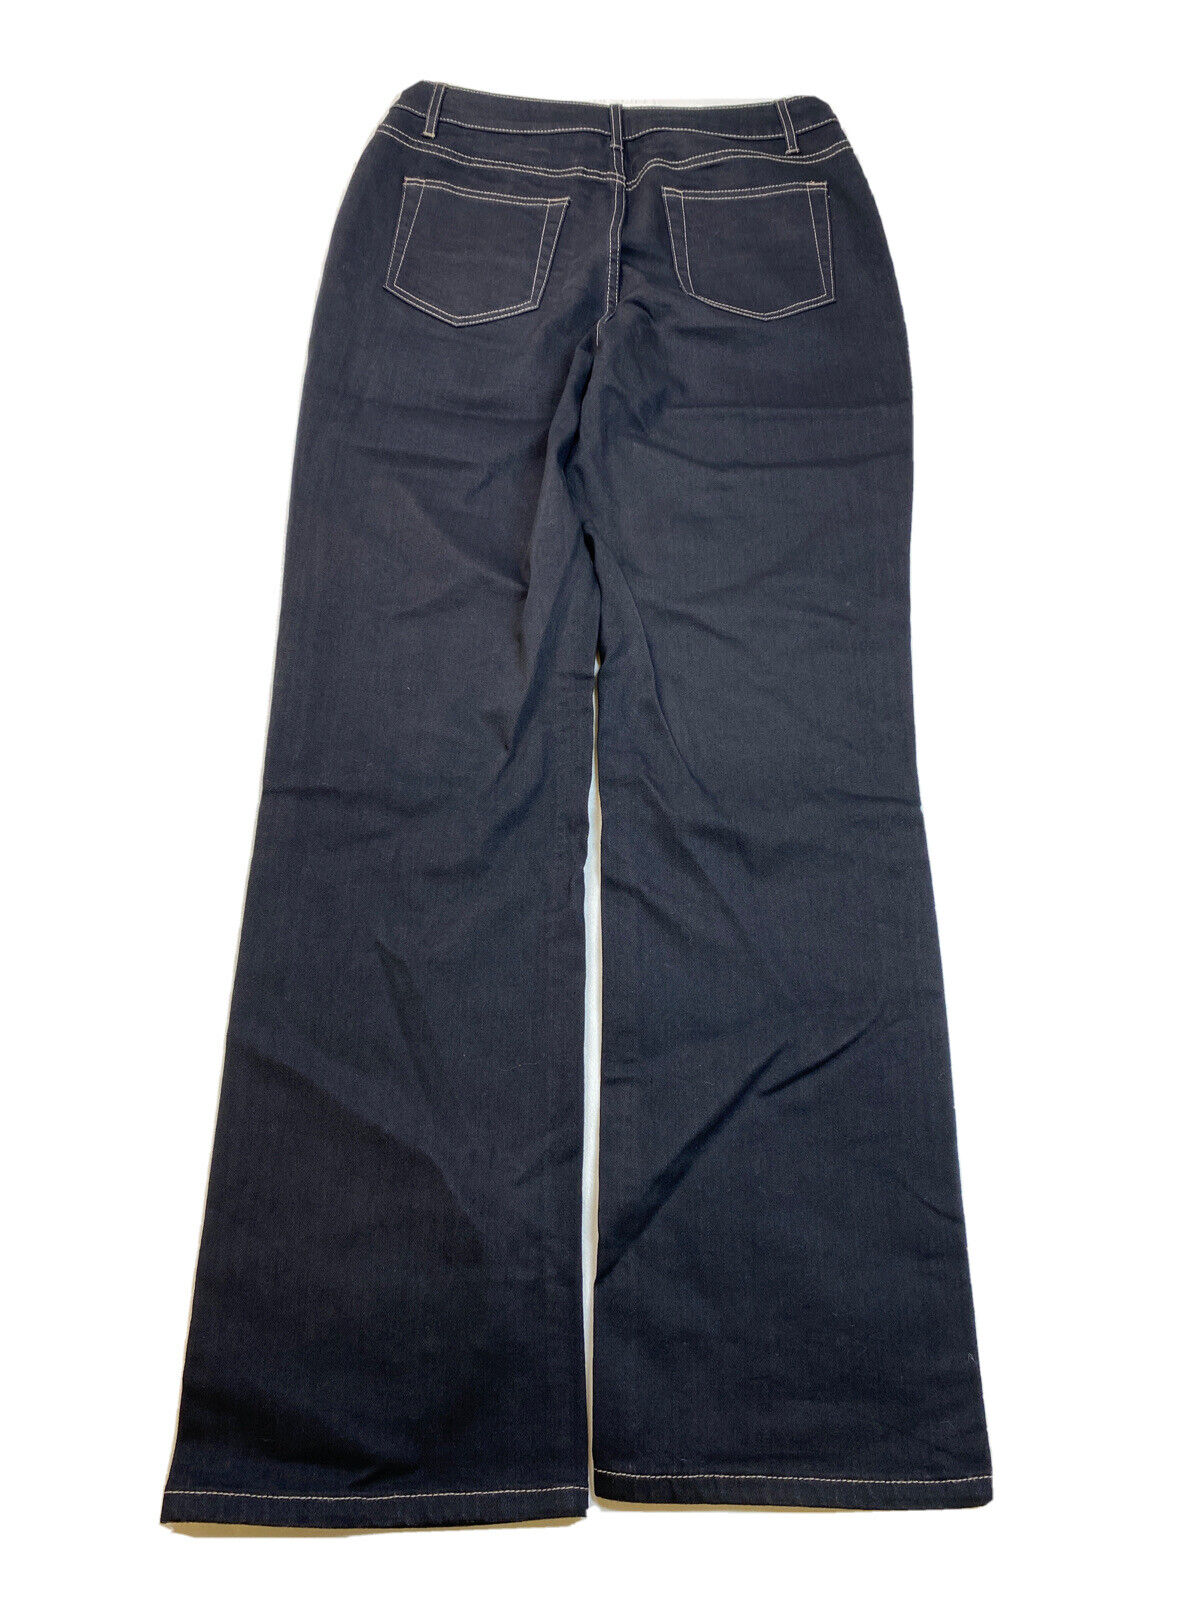 NUEVOS jeans de pierna recta negros Shape Me de Coldwater Creek para mujer - 10